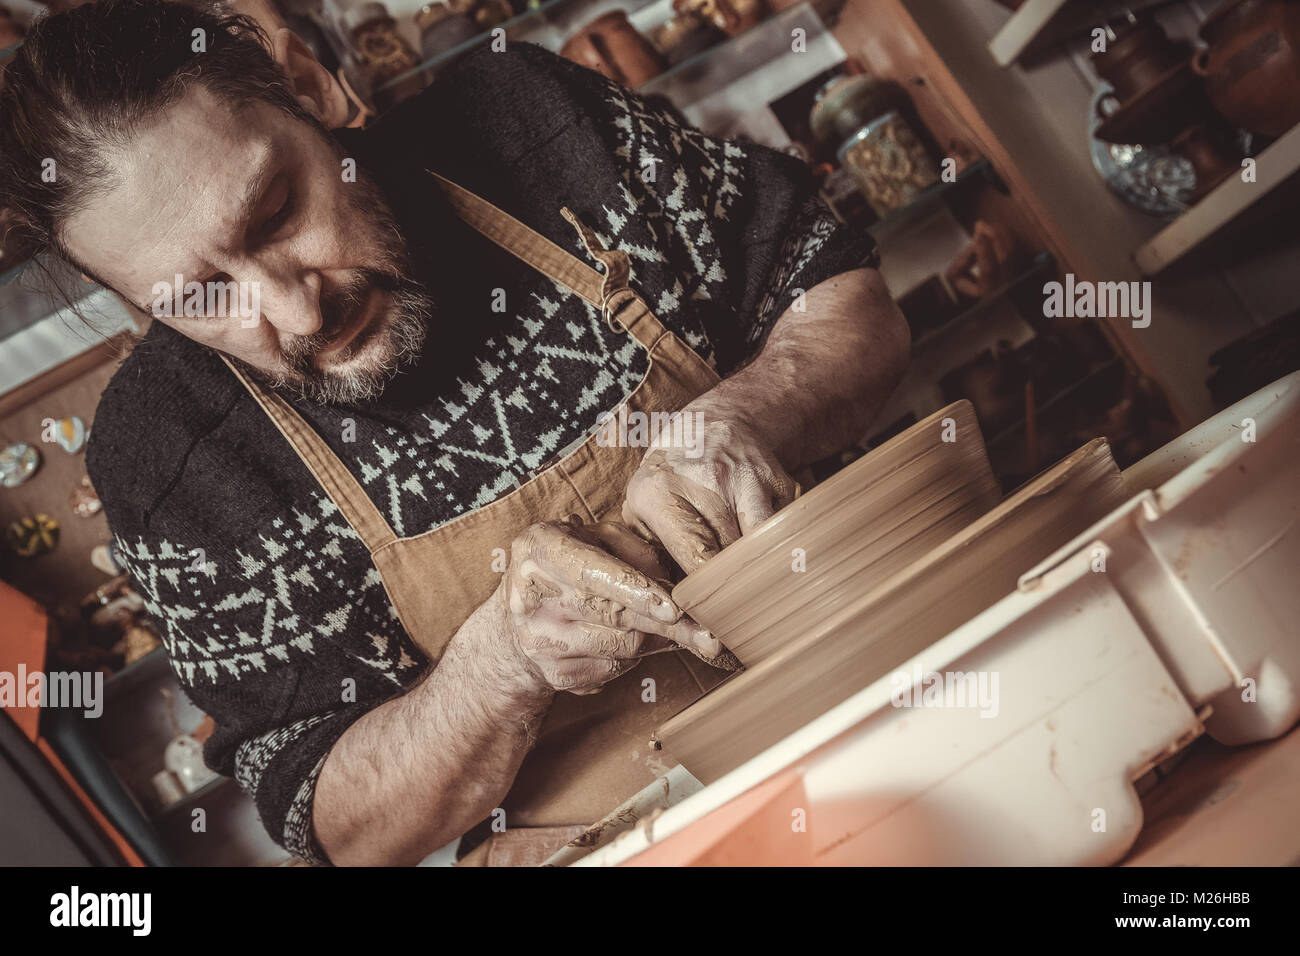 elderly man making pot using pottery wheel in studio Stock Photo